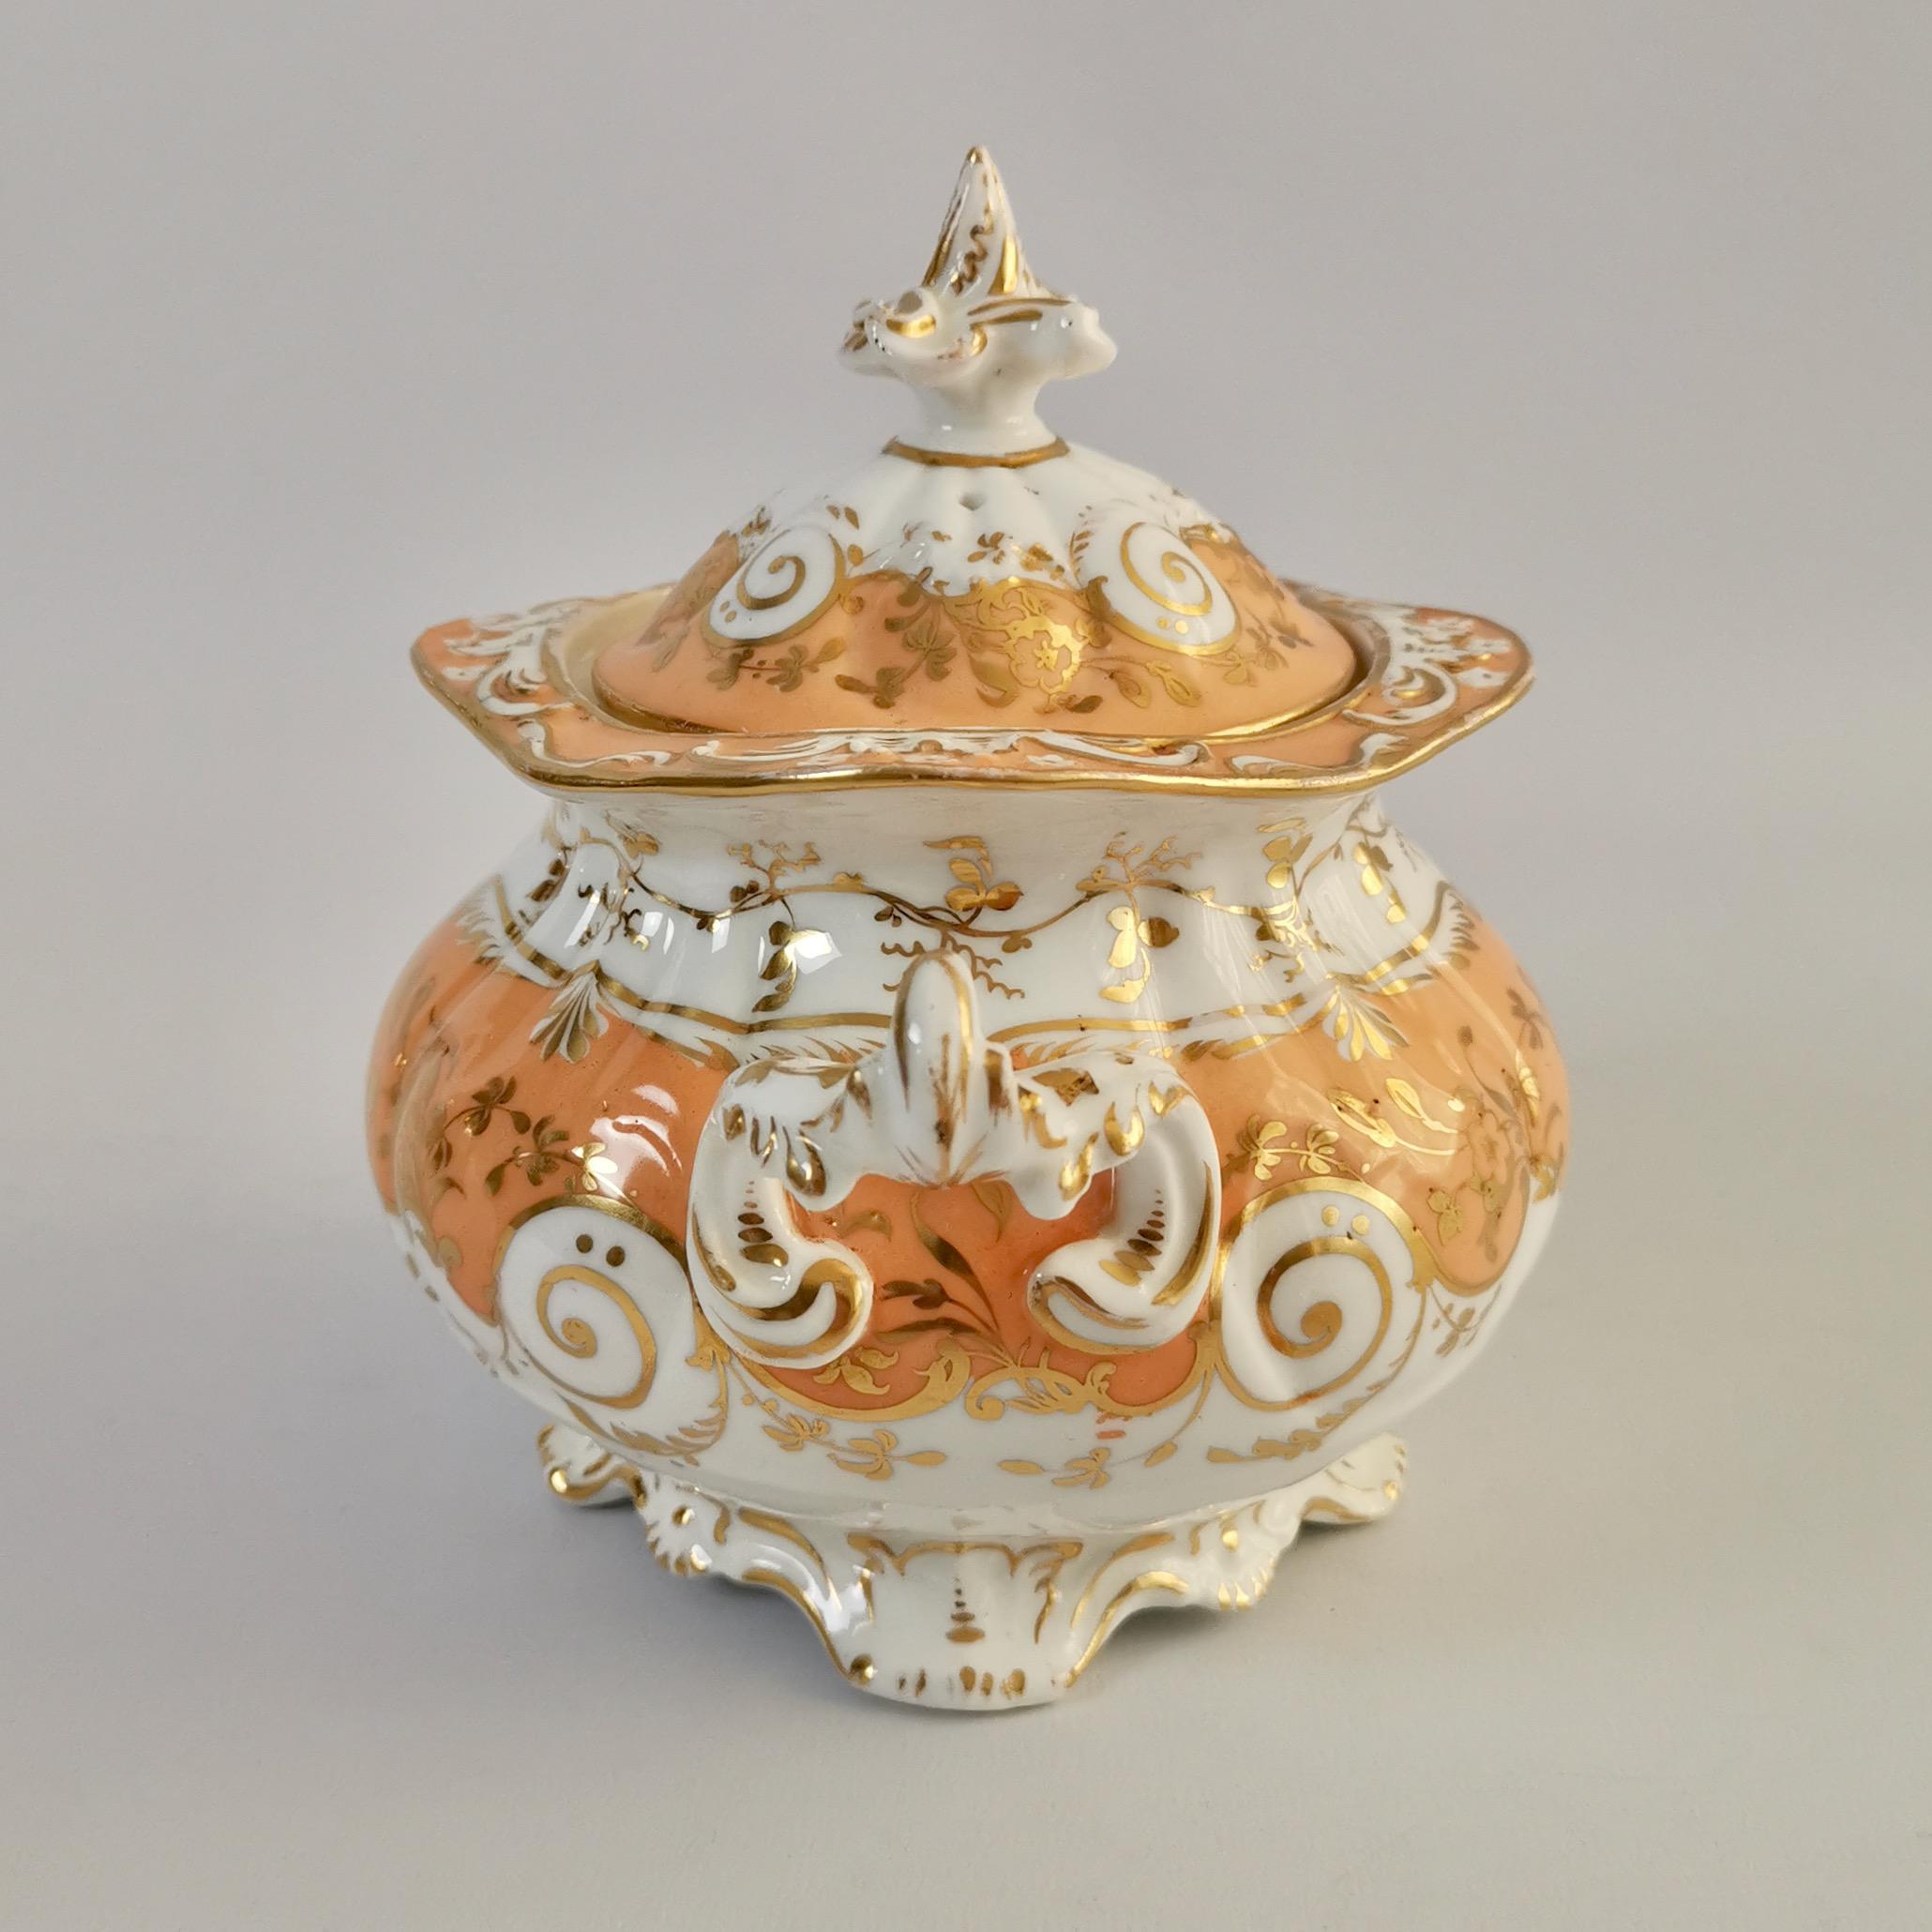 English Coalport Porcelain Sucrier, Apricot and Gilt, Rococo Revival, circa 1835